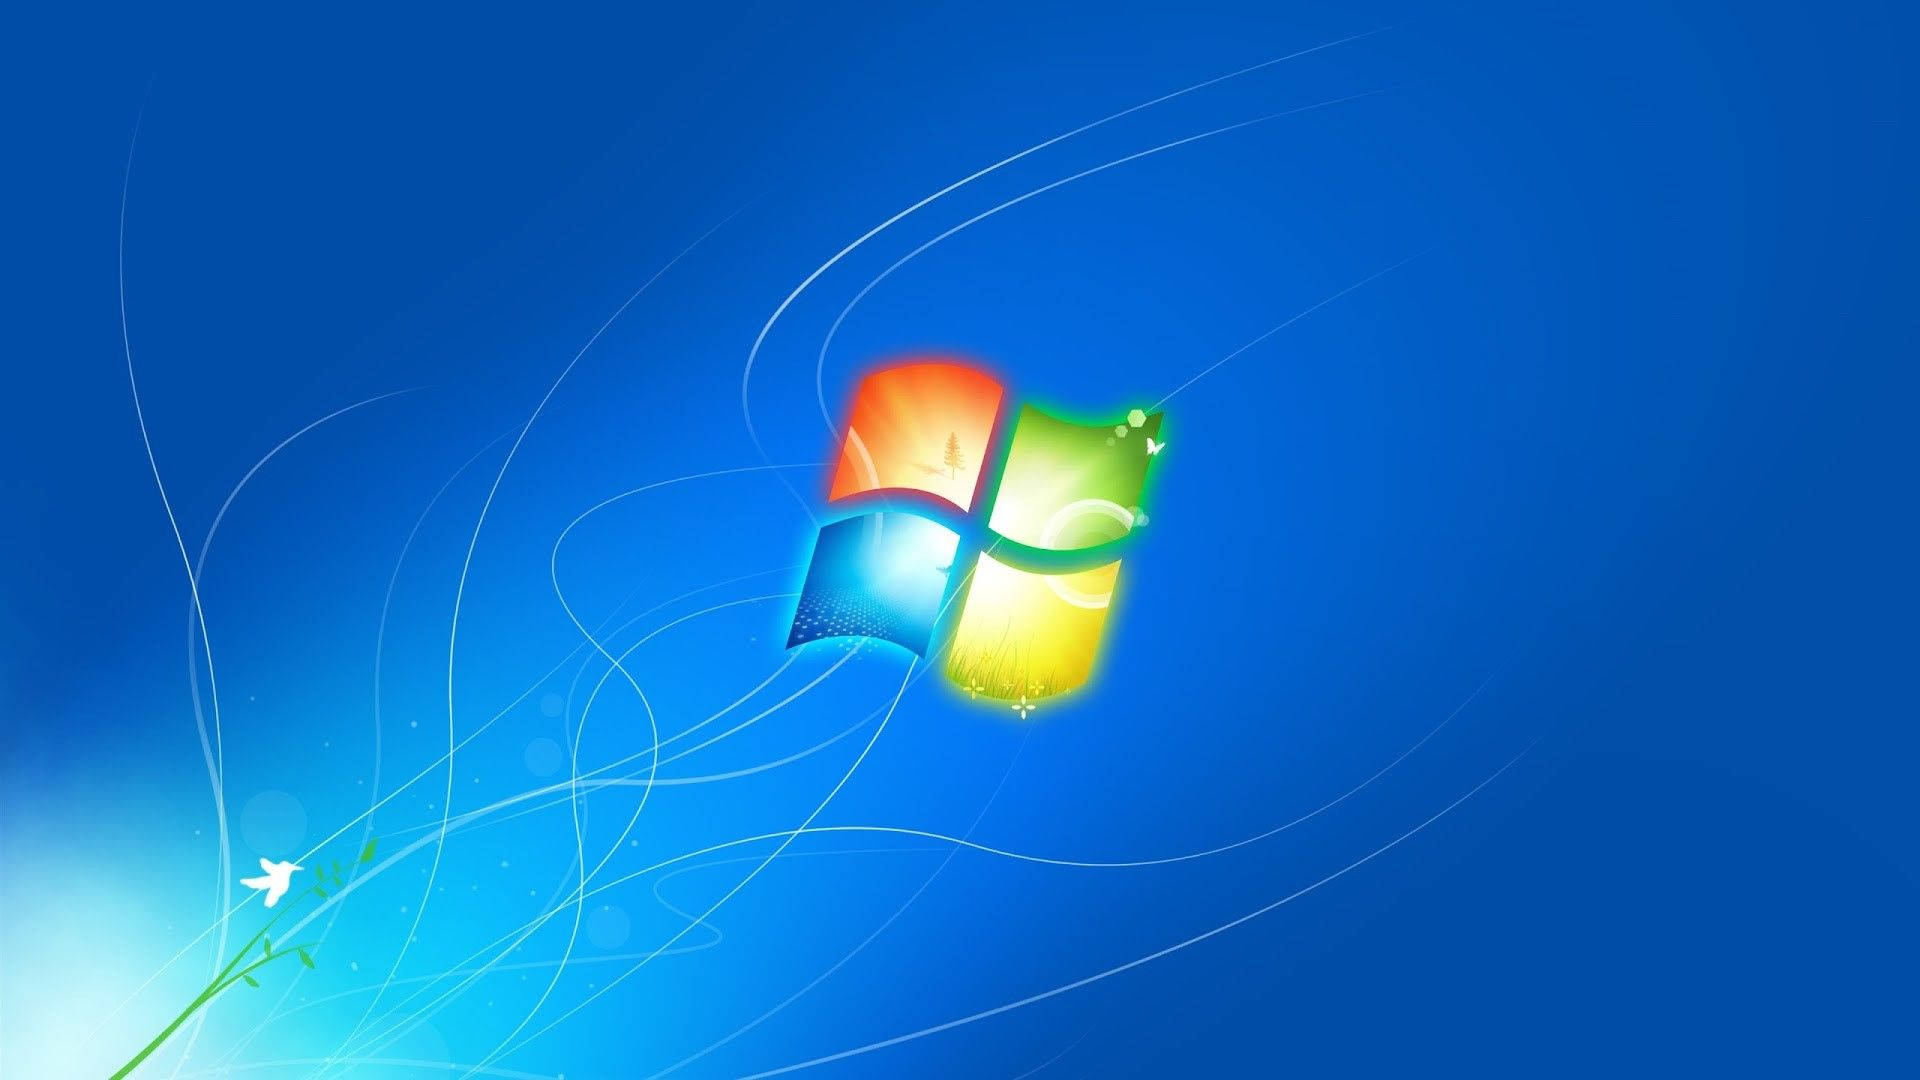 Blue Windows 7 Screen Background